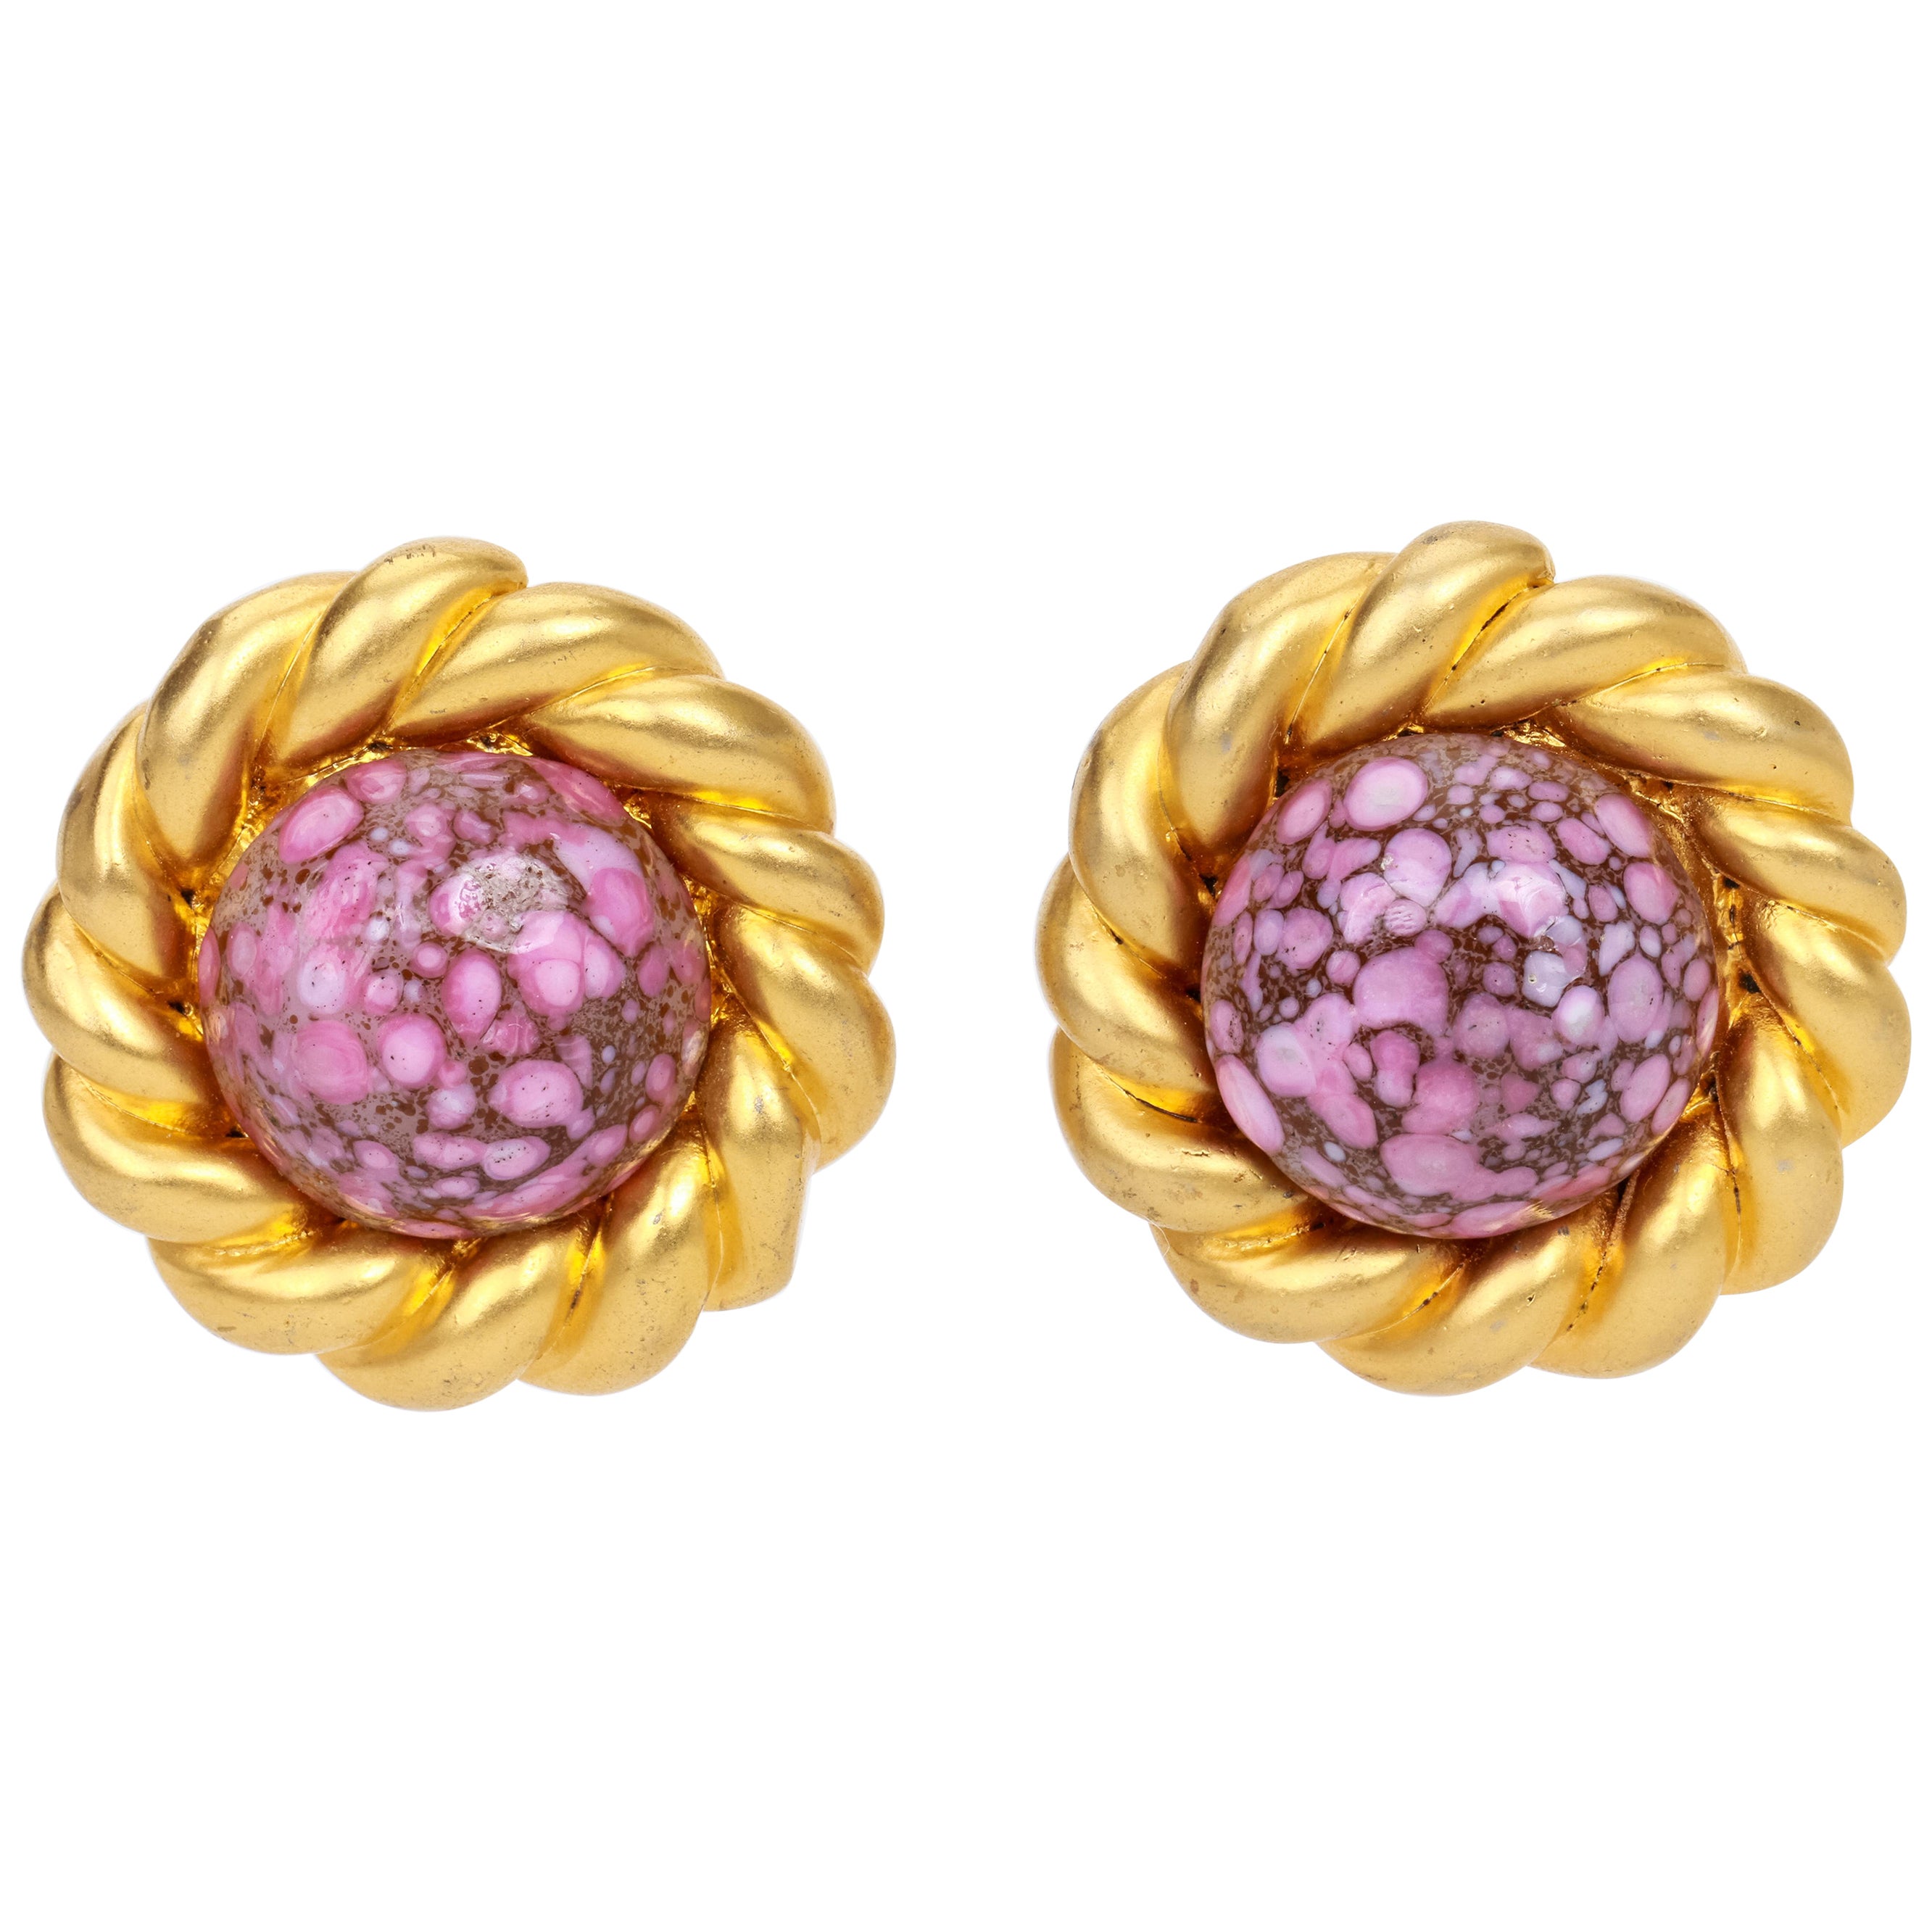 1970's Vintage Chanel  Runway Pink Gripoix Clip Earrings